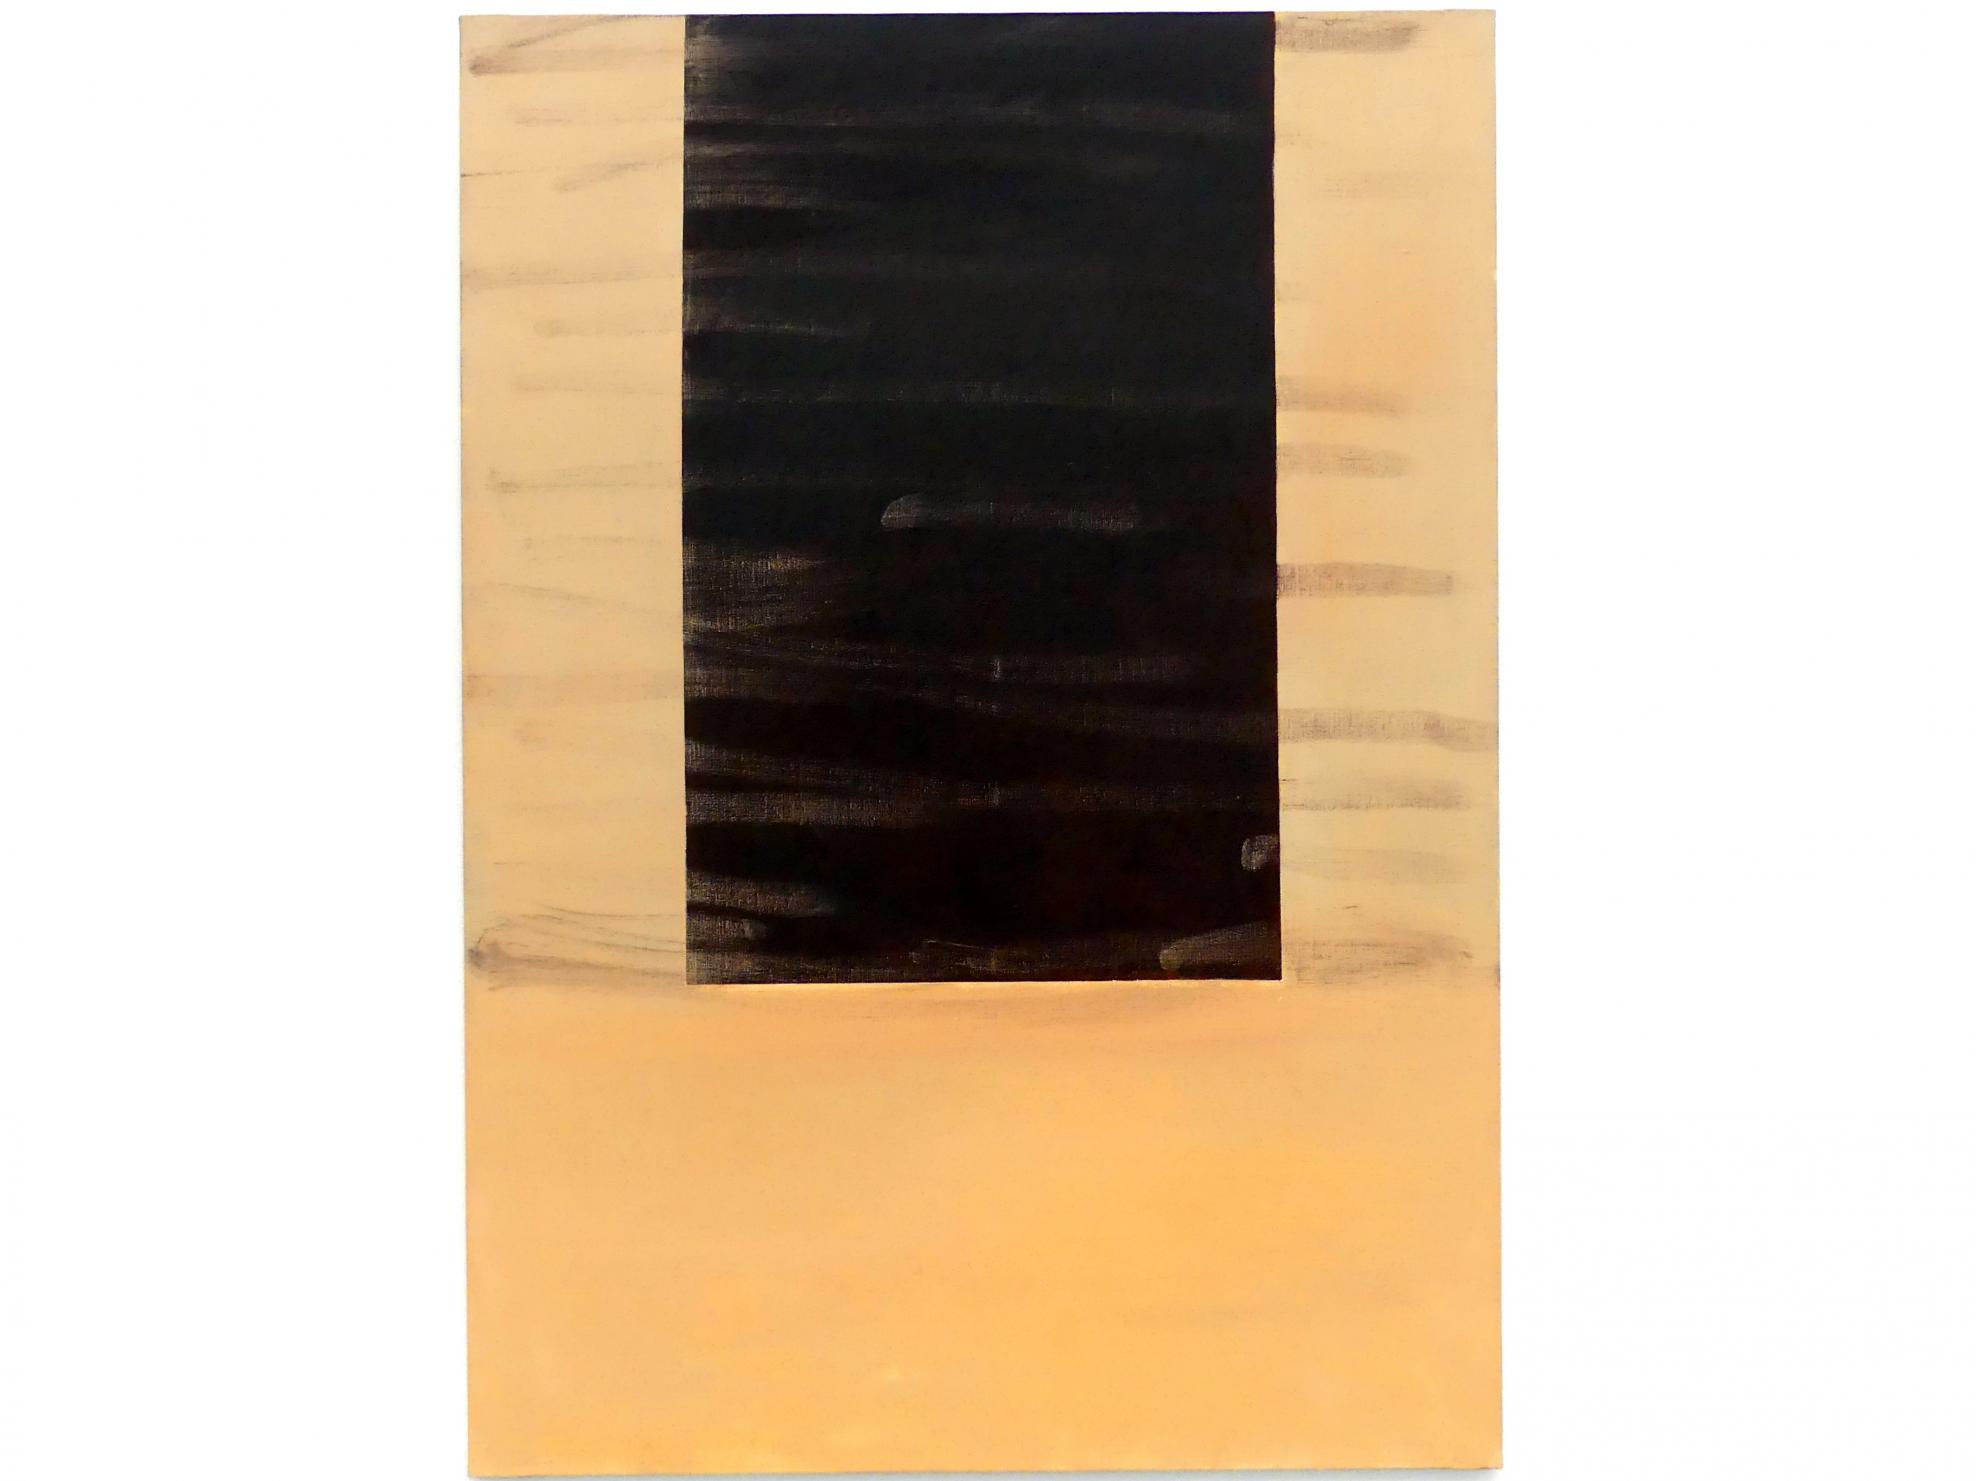 Raoul De Keyser (1964–2012), Untitled, München, Pinakothek der Moderne, Ausstellung "Raoul De Keyser – Œuvre" vom 05.04.-08.09.2019, Saal 21, 1990, Bild 1/2